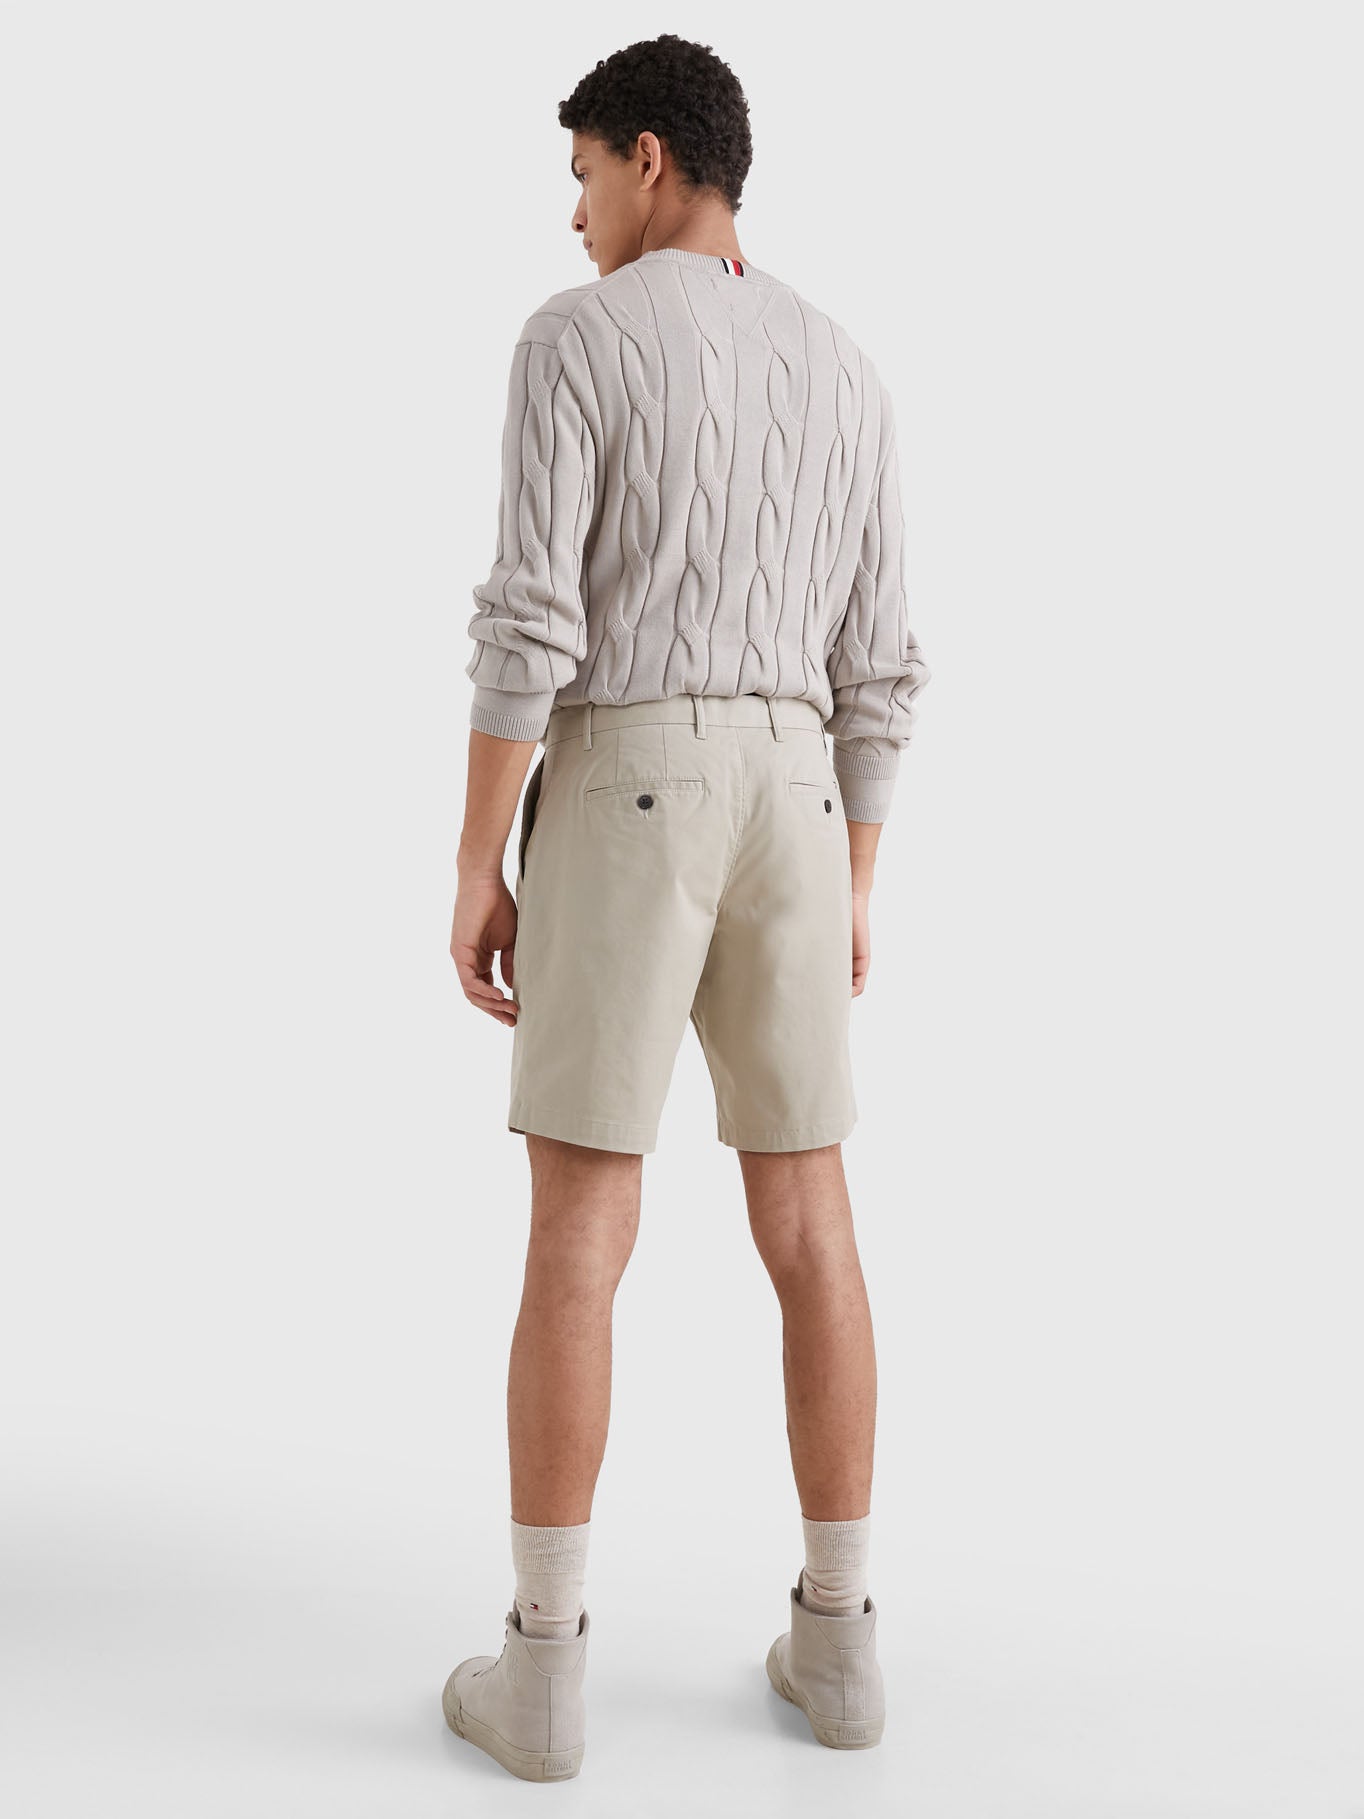 pantalon-corto-tommy-hilfiger-casual-p-caballeros-2